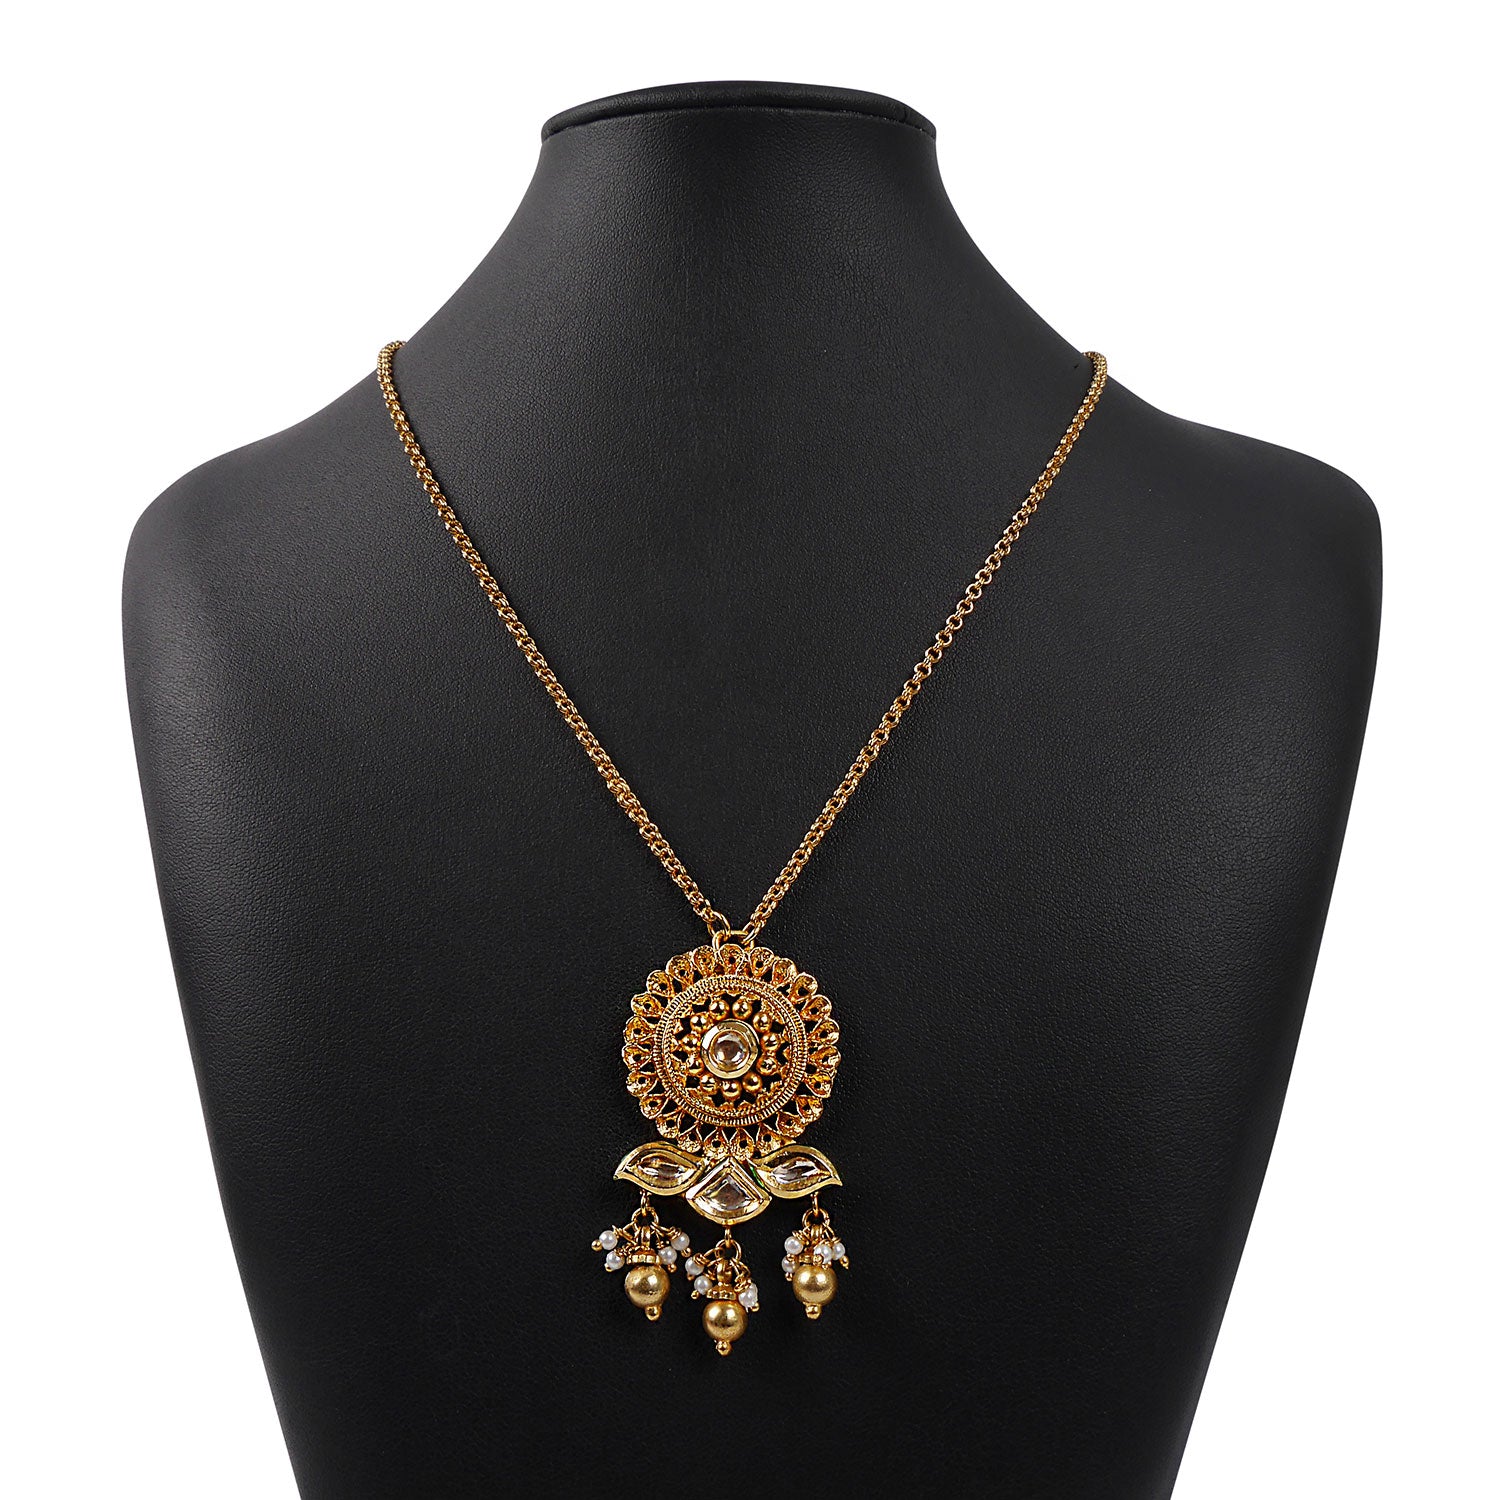 Classic Round Pendant Necklace in Antique Gold